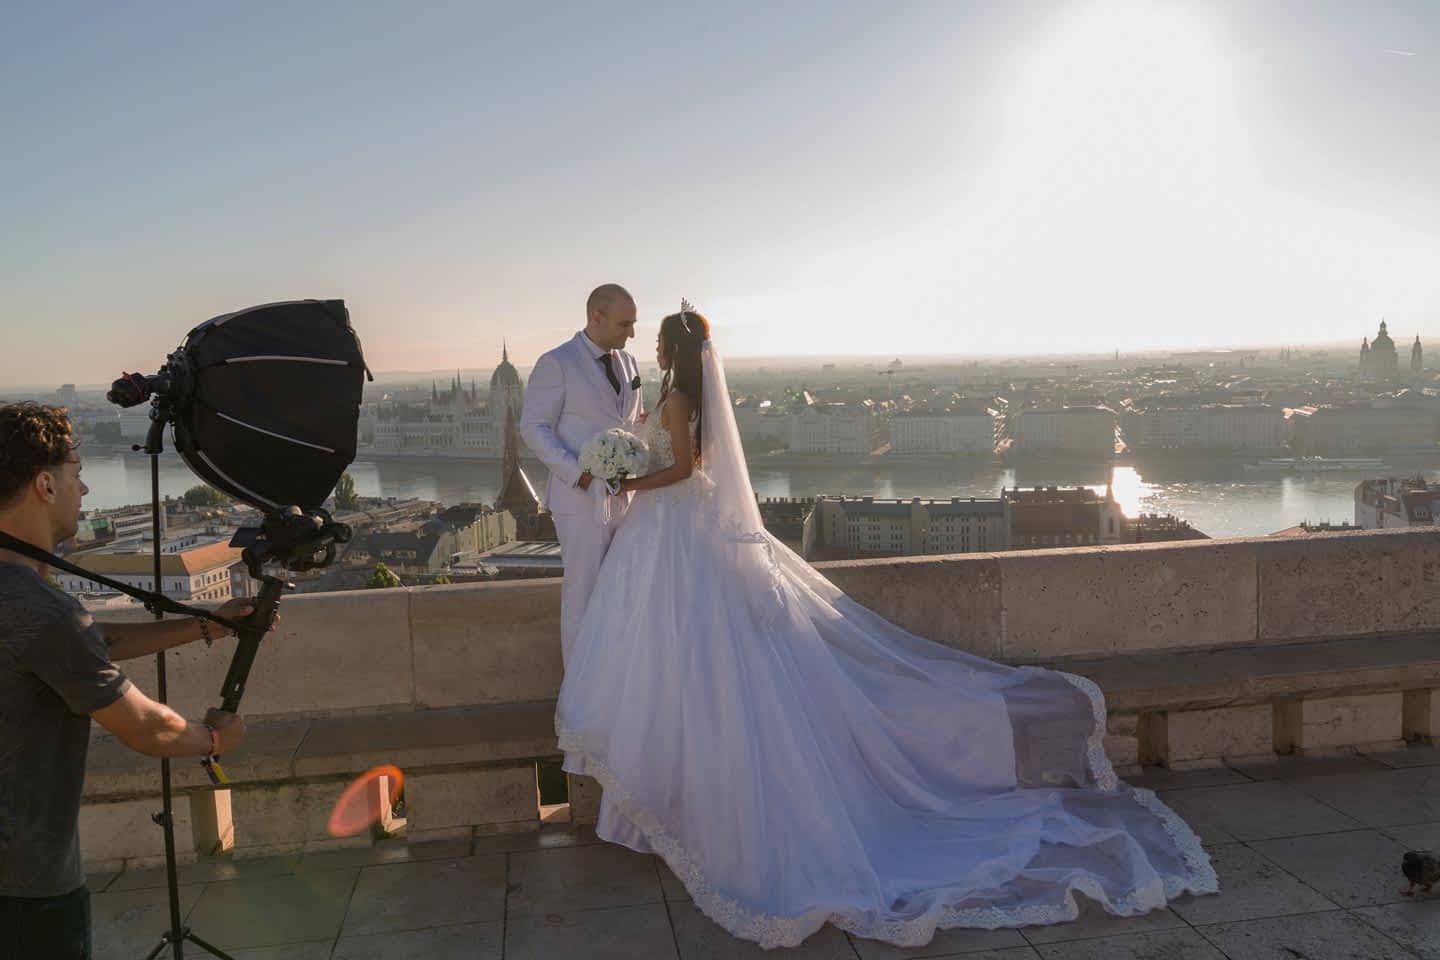 2023 Magic Proposal Photographer & Pre-Wedding Budapesta BA prewedding RAW Instawalk Your memories captured by a local Photographer / Videographer in Budapest.